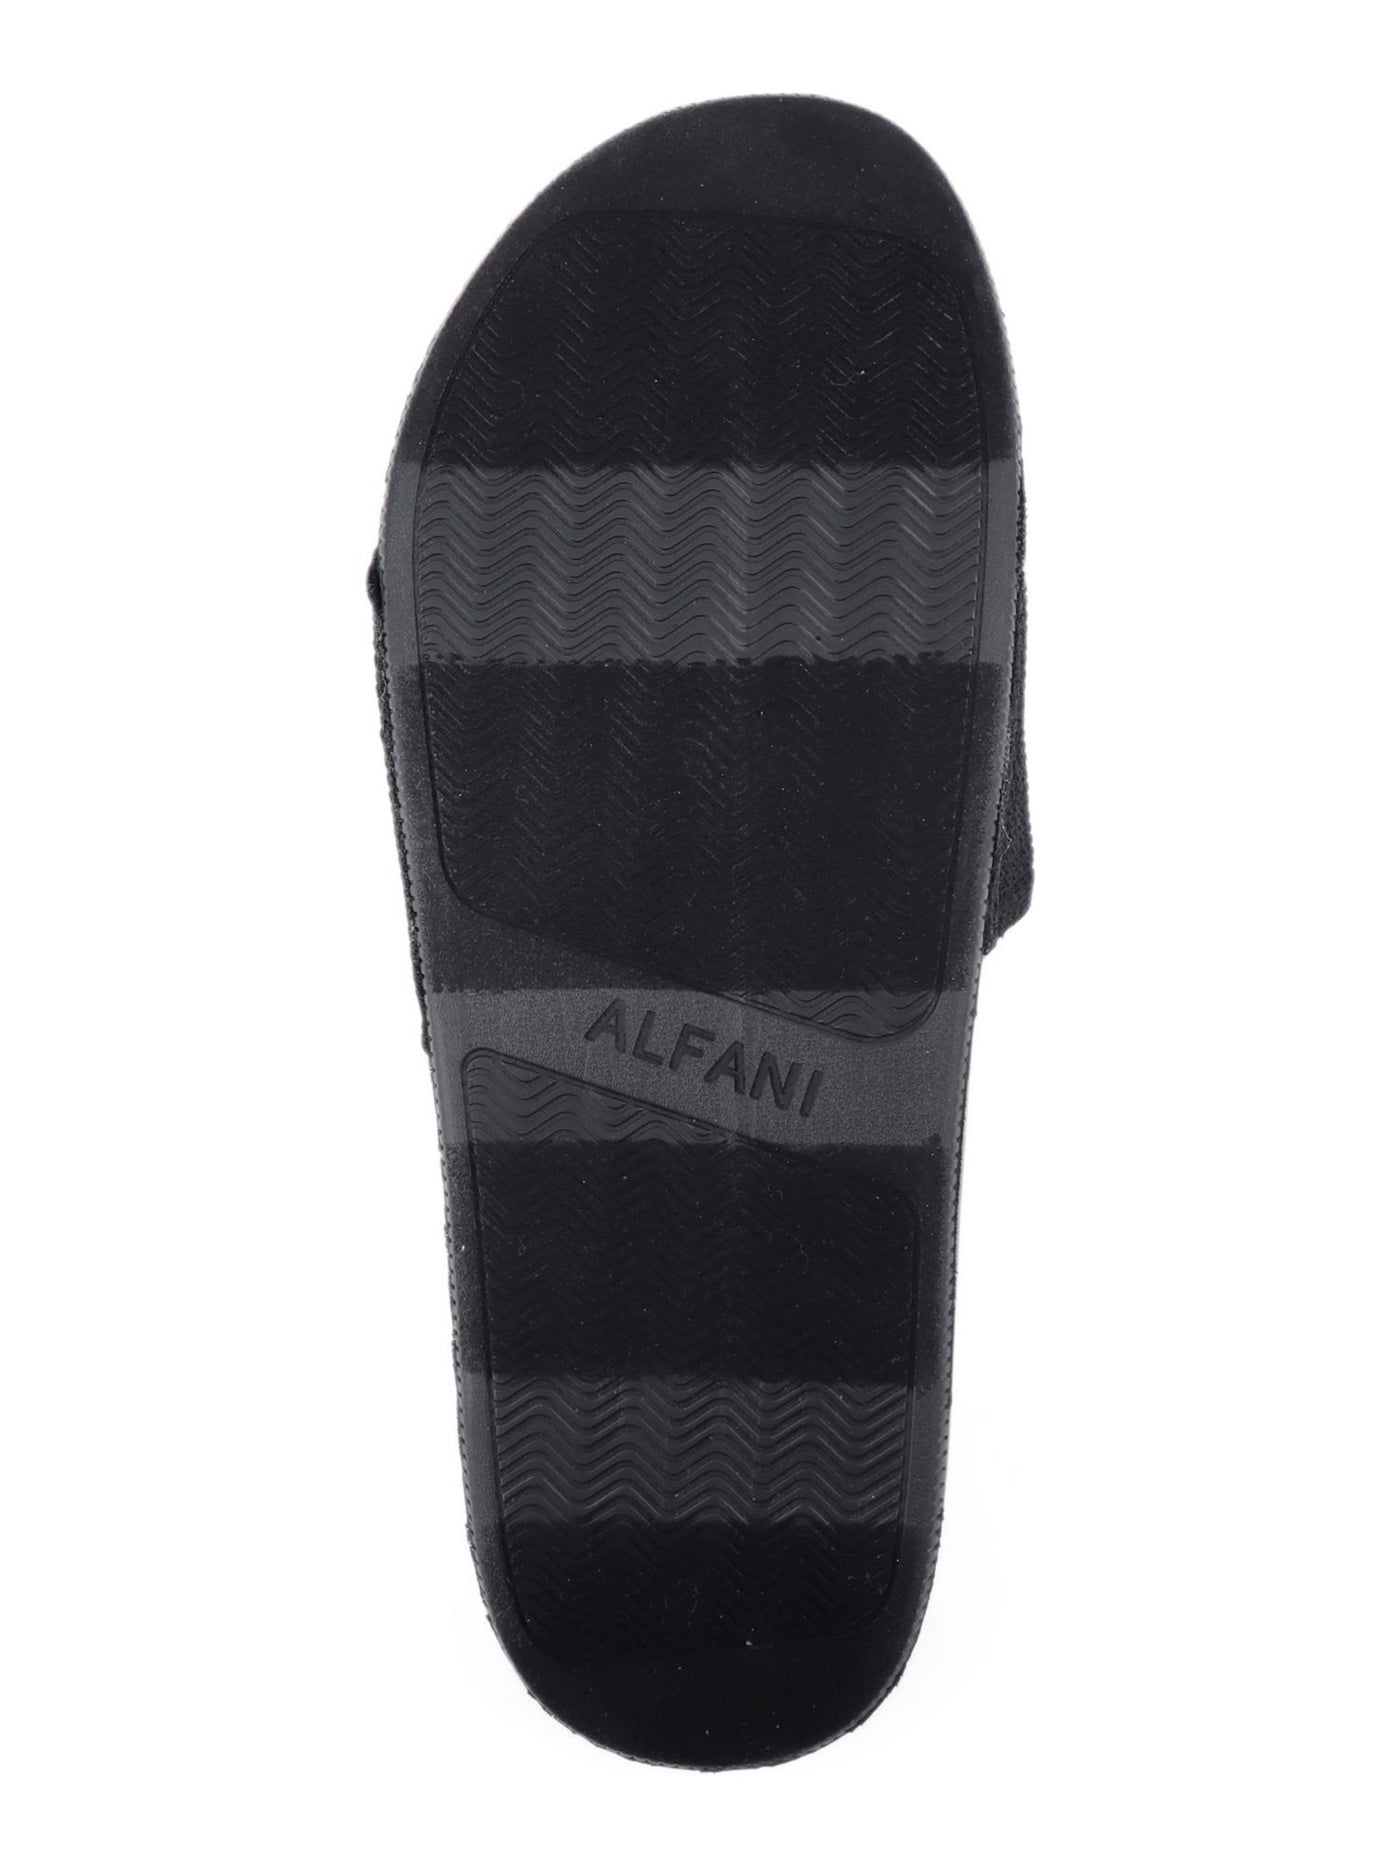 ALFANI Mens Black Knit Cushioned Comfort Ace Round Toe Platform Slip On Slide Sandals Shoes 12 M